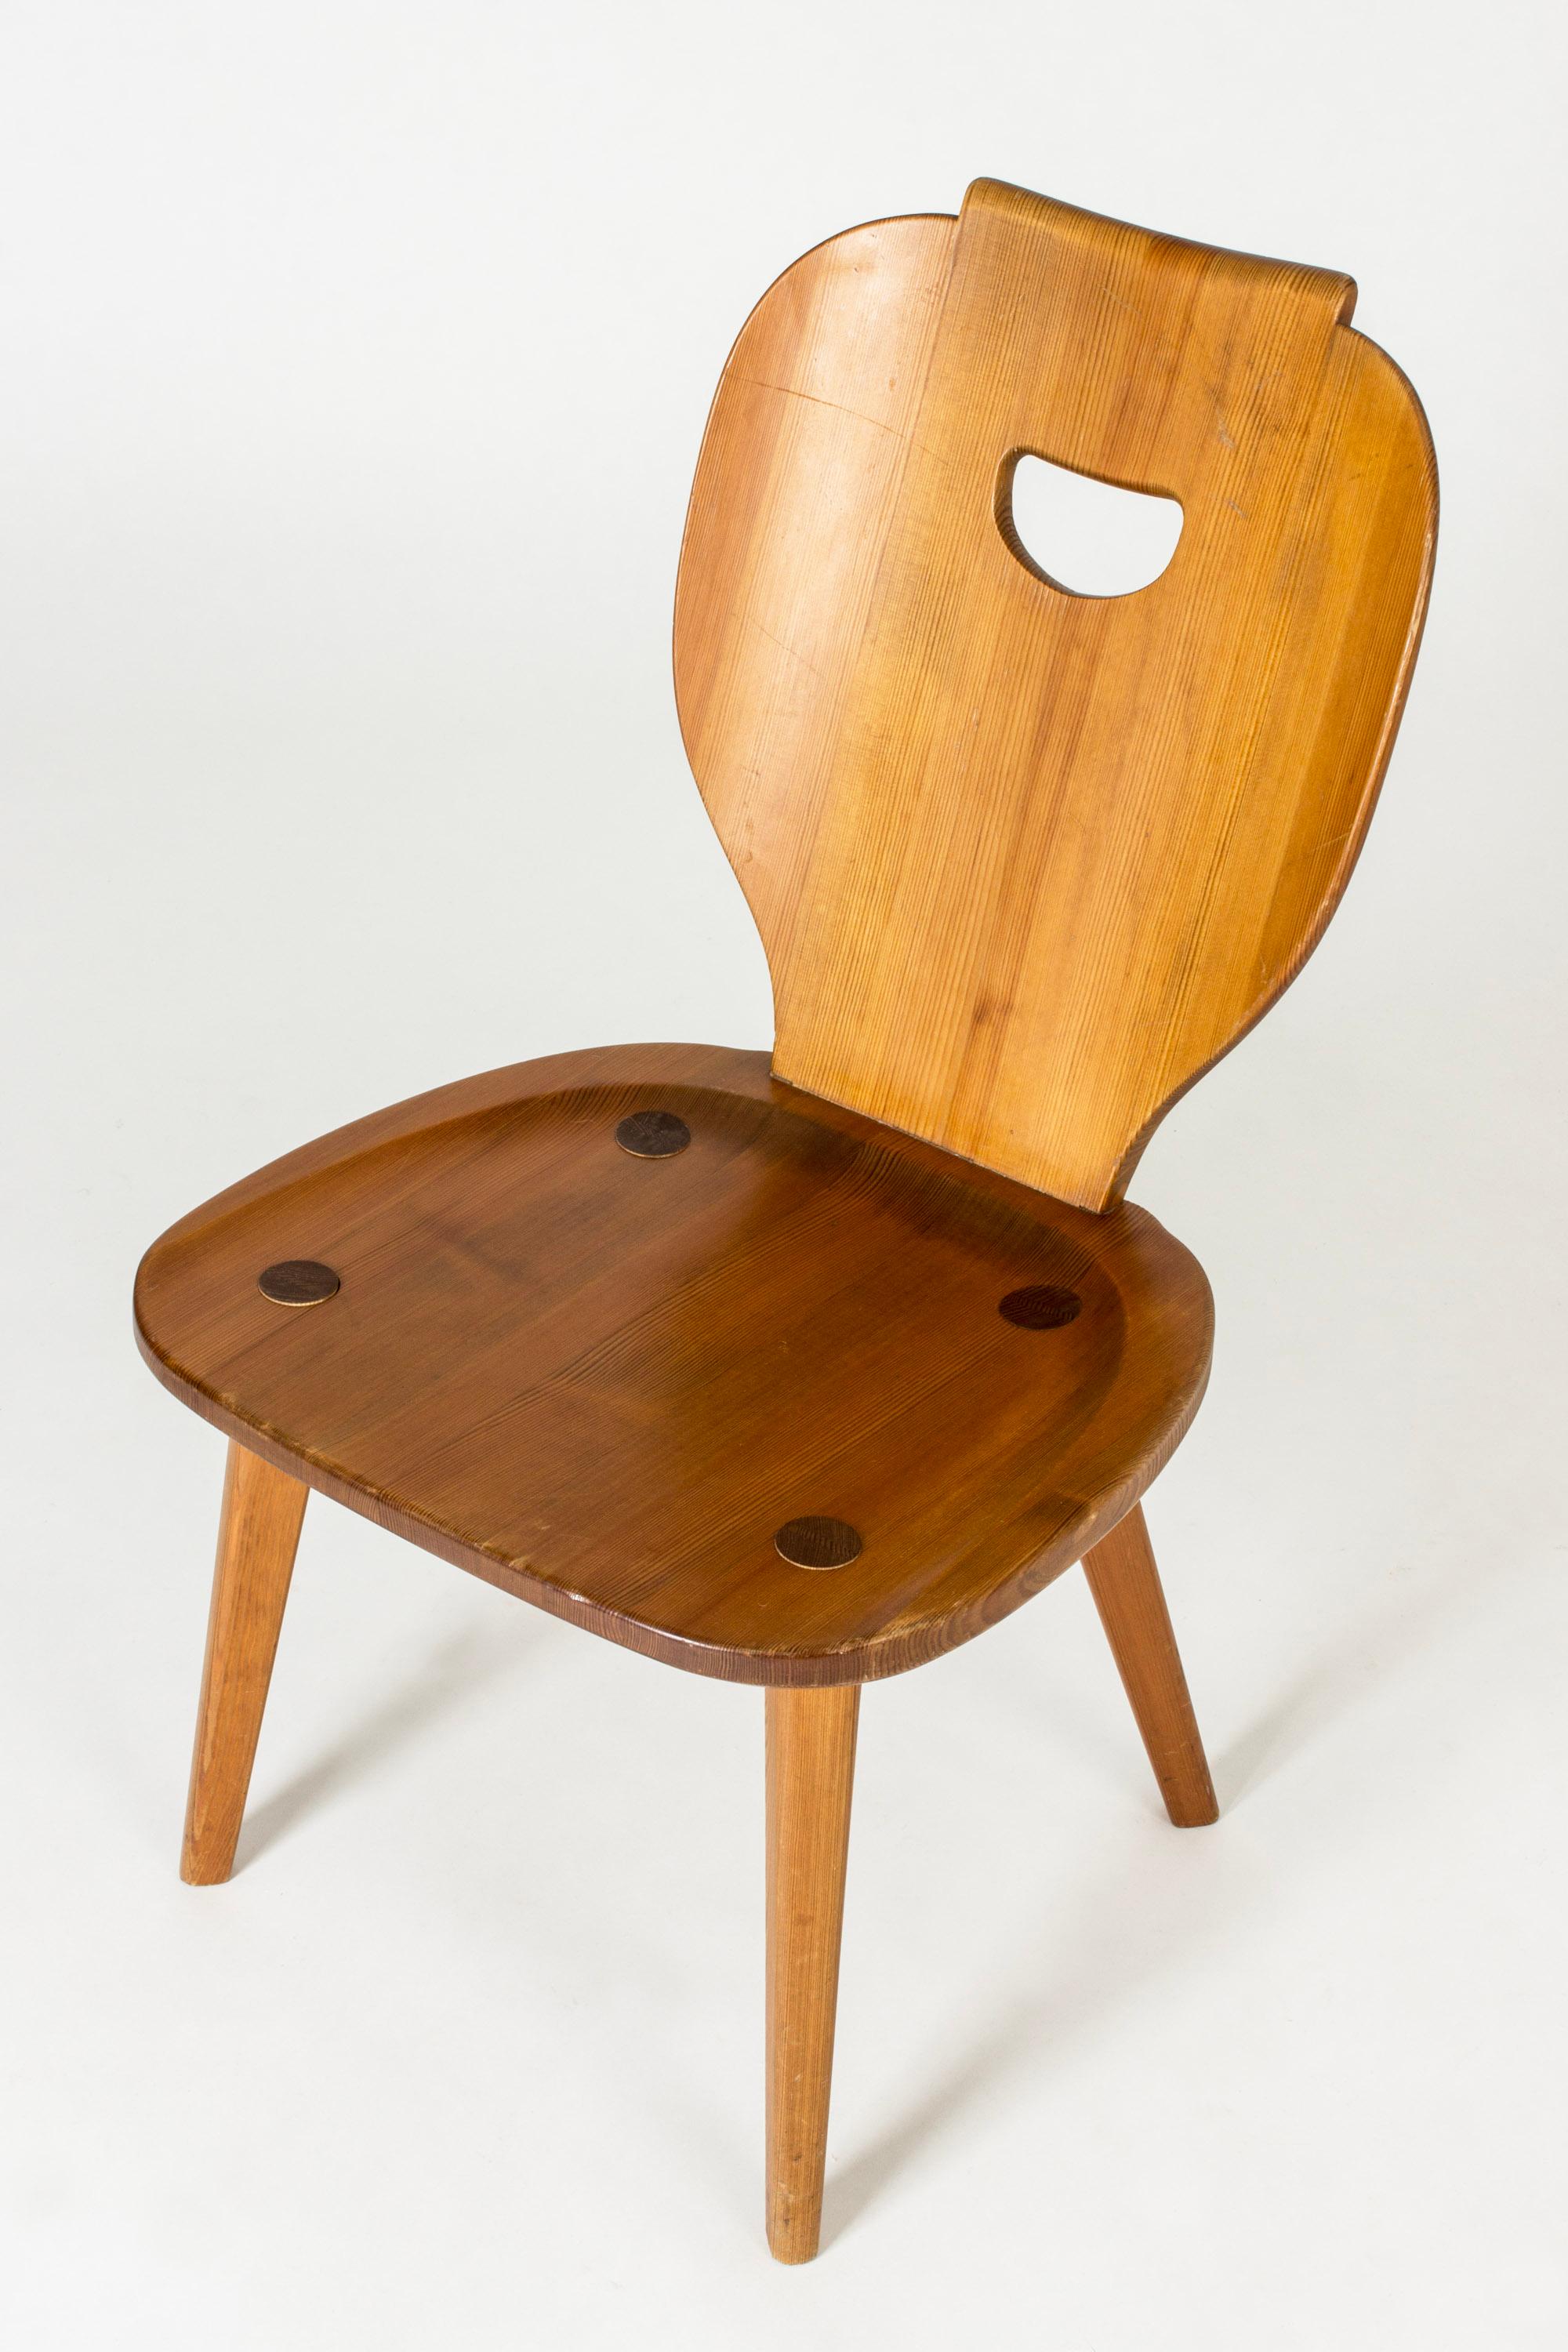 Midcentury Modern Pine Side Chair by Carl Malmsten, Svensk Fur, Sweden, 1940s For Sale 3